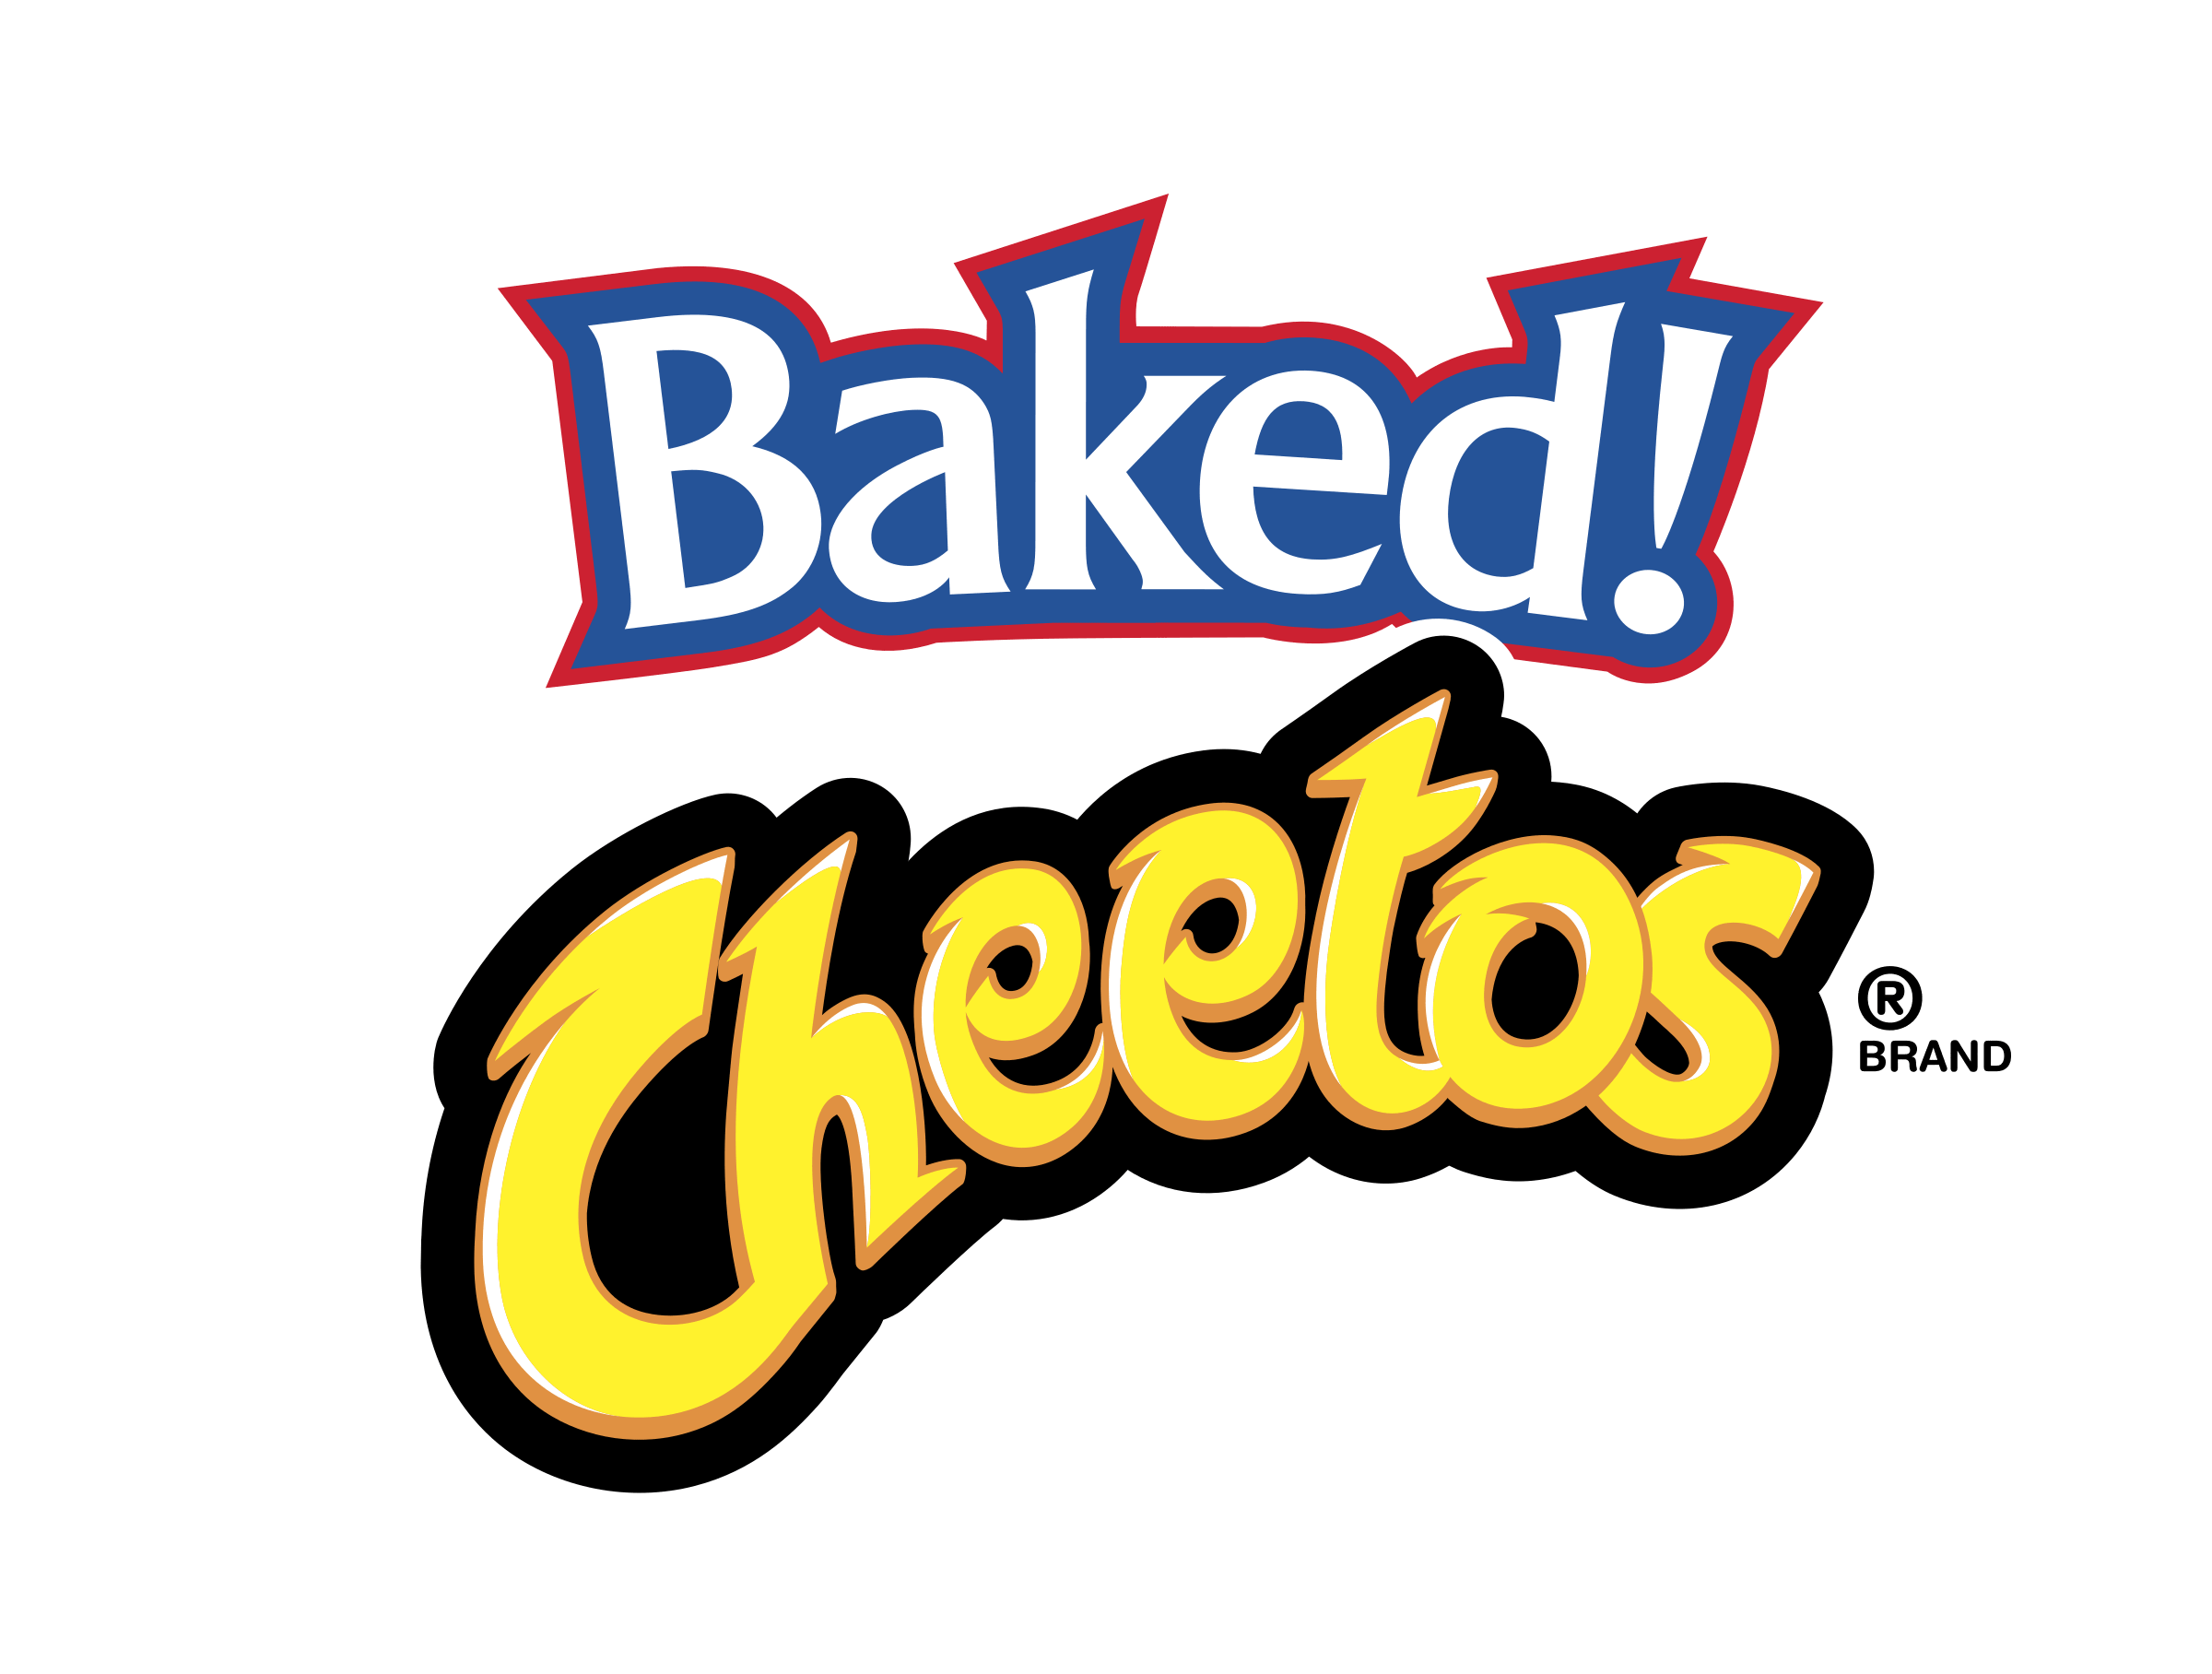 Chettos Logo - BAKED CHEETOS Logo PNG Transparent & SVG Vector - Freebie Supply